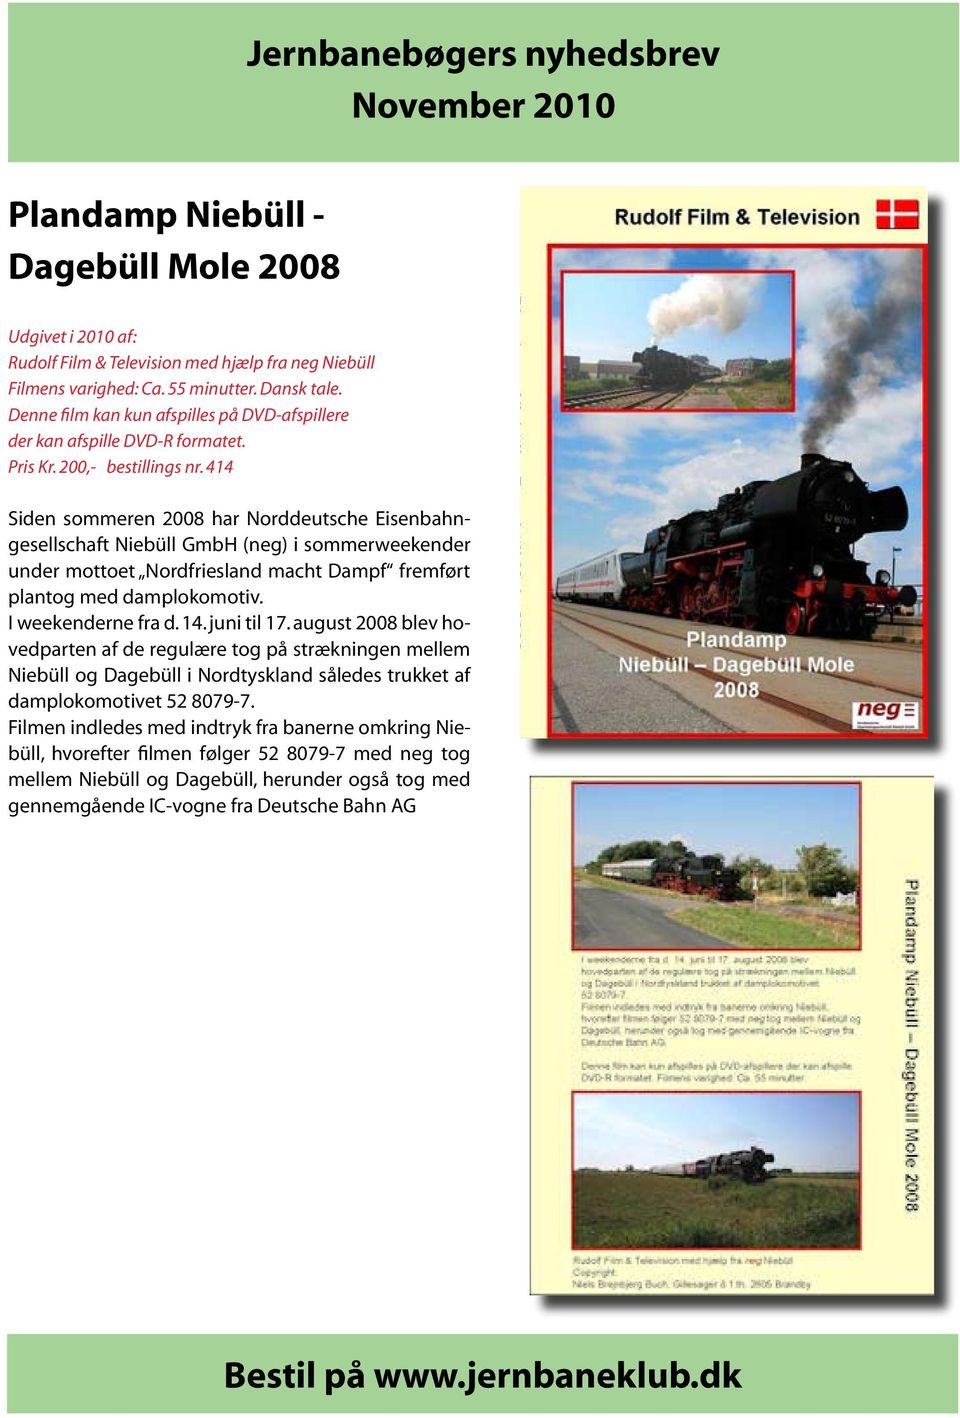 414 Siden sommeren 2008 har Norddeutsche Eisenbahngesellschaft Niebüll GmbH (neg) i sommerweekender under mottoet Nordfriesland macht Dampf fremført plantog med damplokomotiv. I weekenderne fra d. 14.